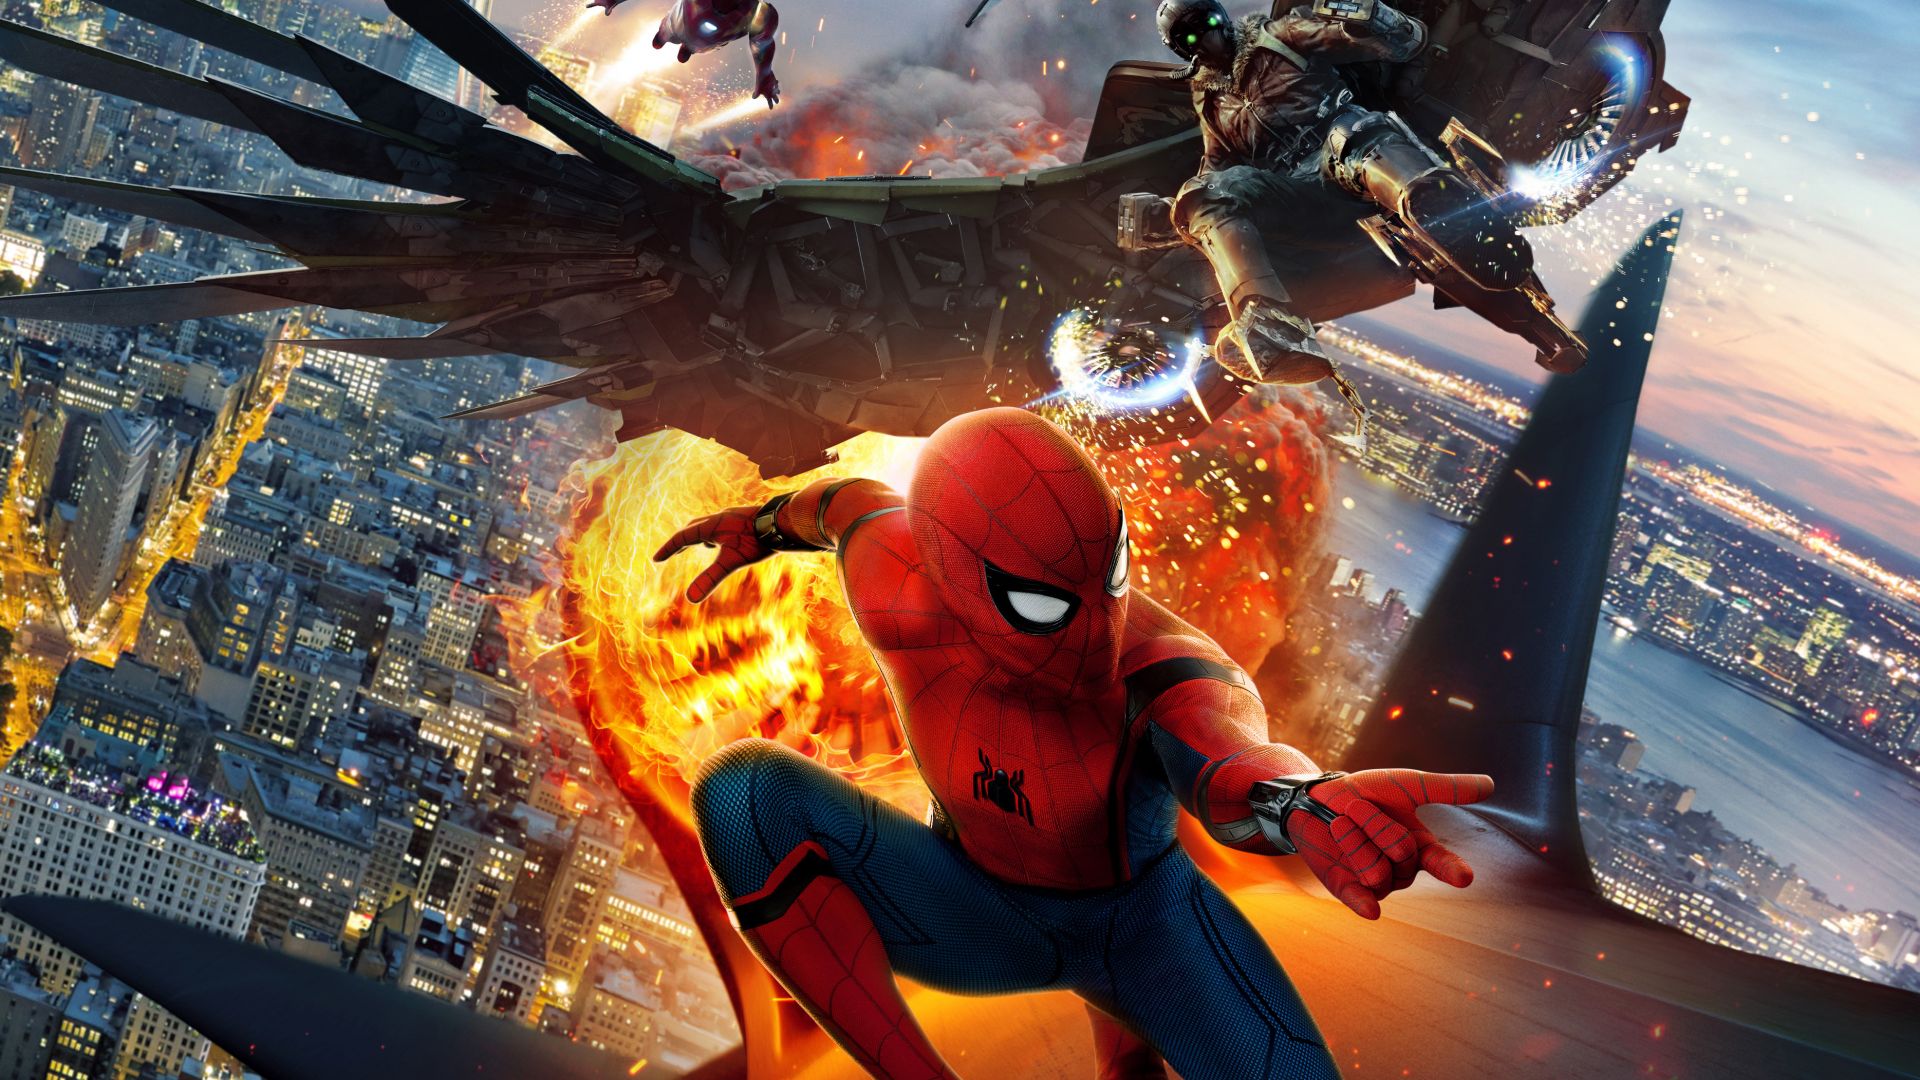 Wallpaper Spider Man: Homecoming, movie, poster, iron man, spider man